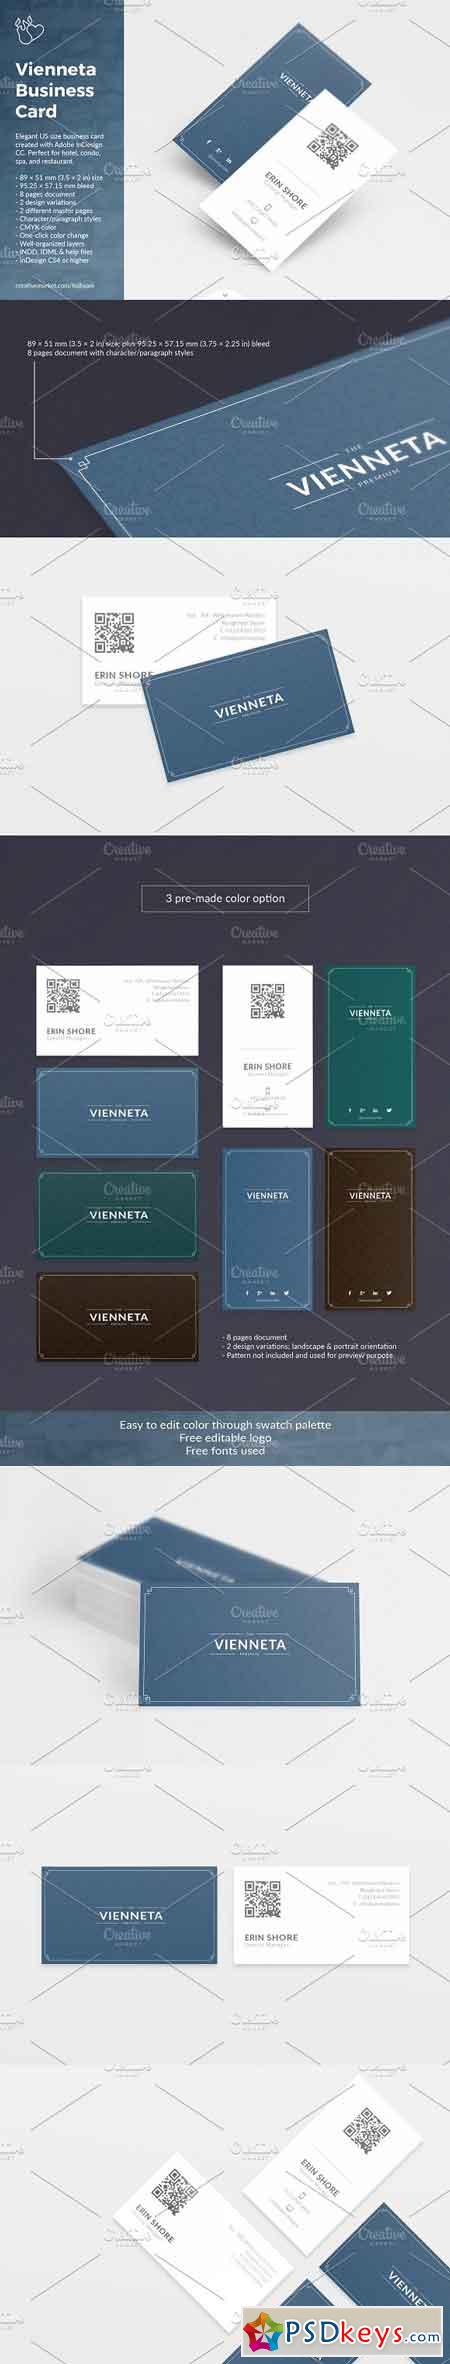 Vienneta Business Card [25% OFF] 969098